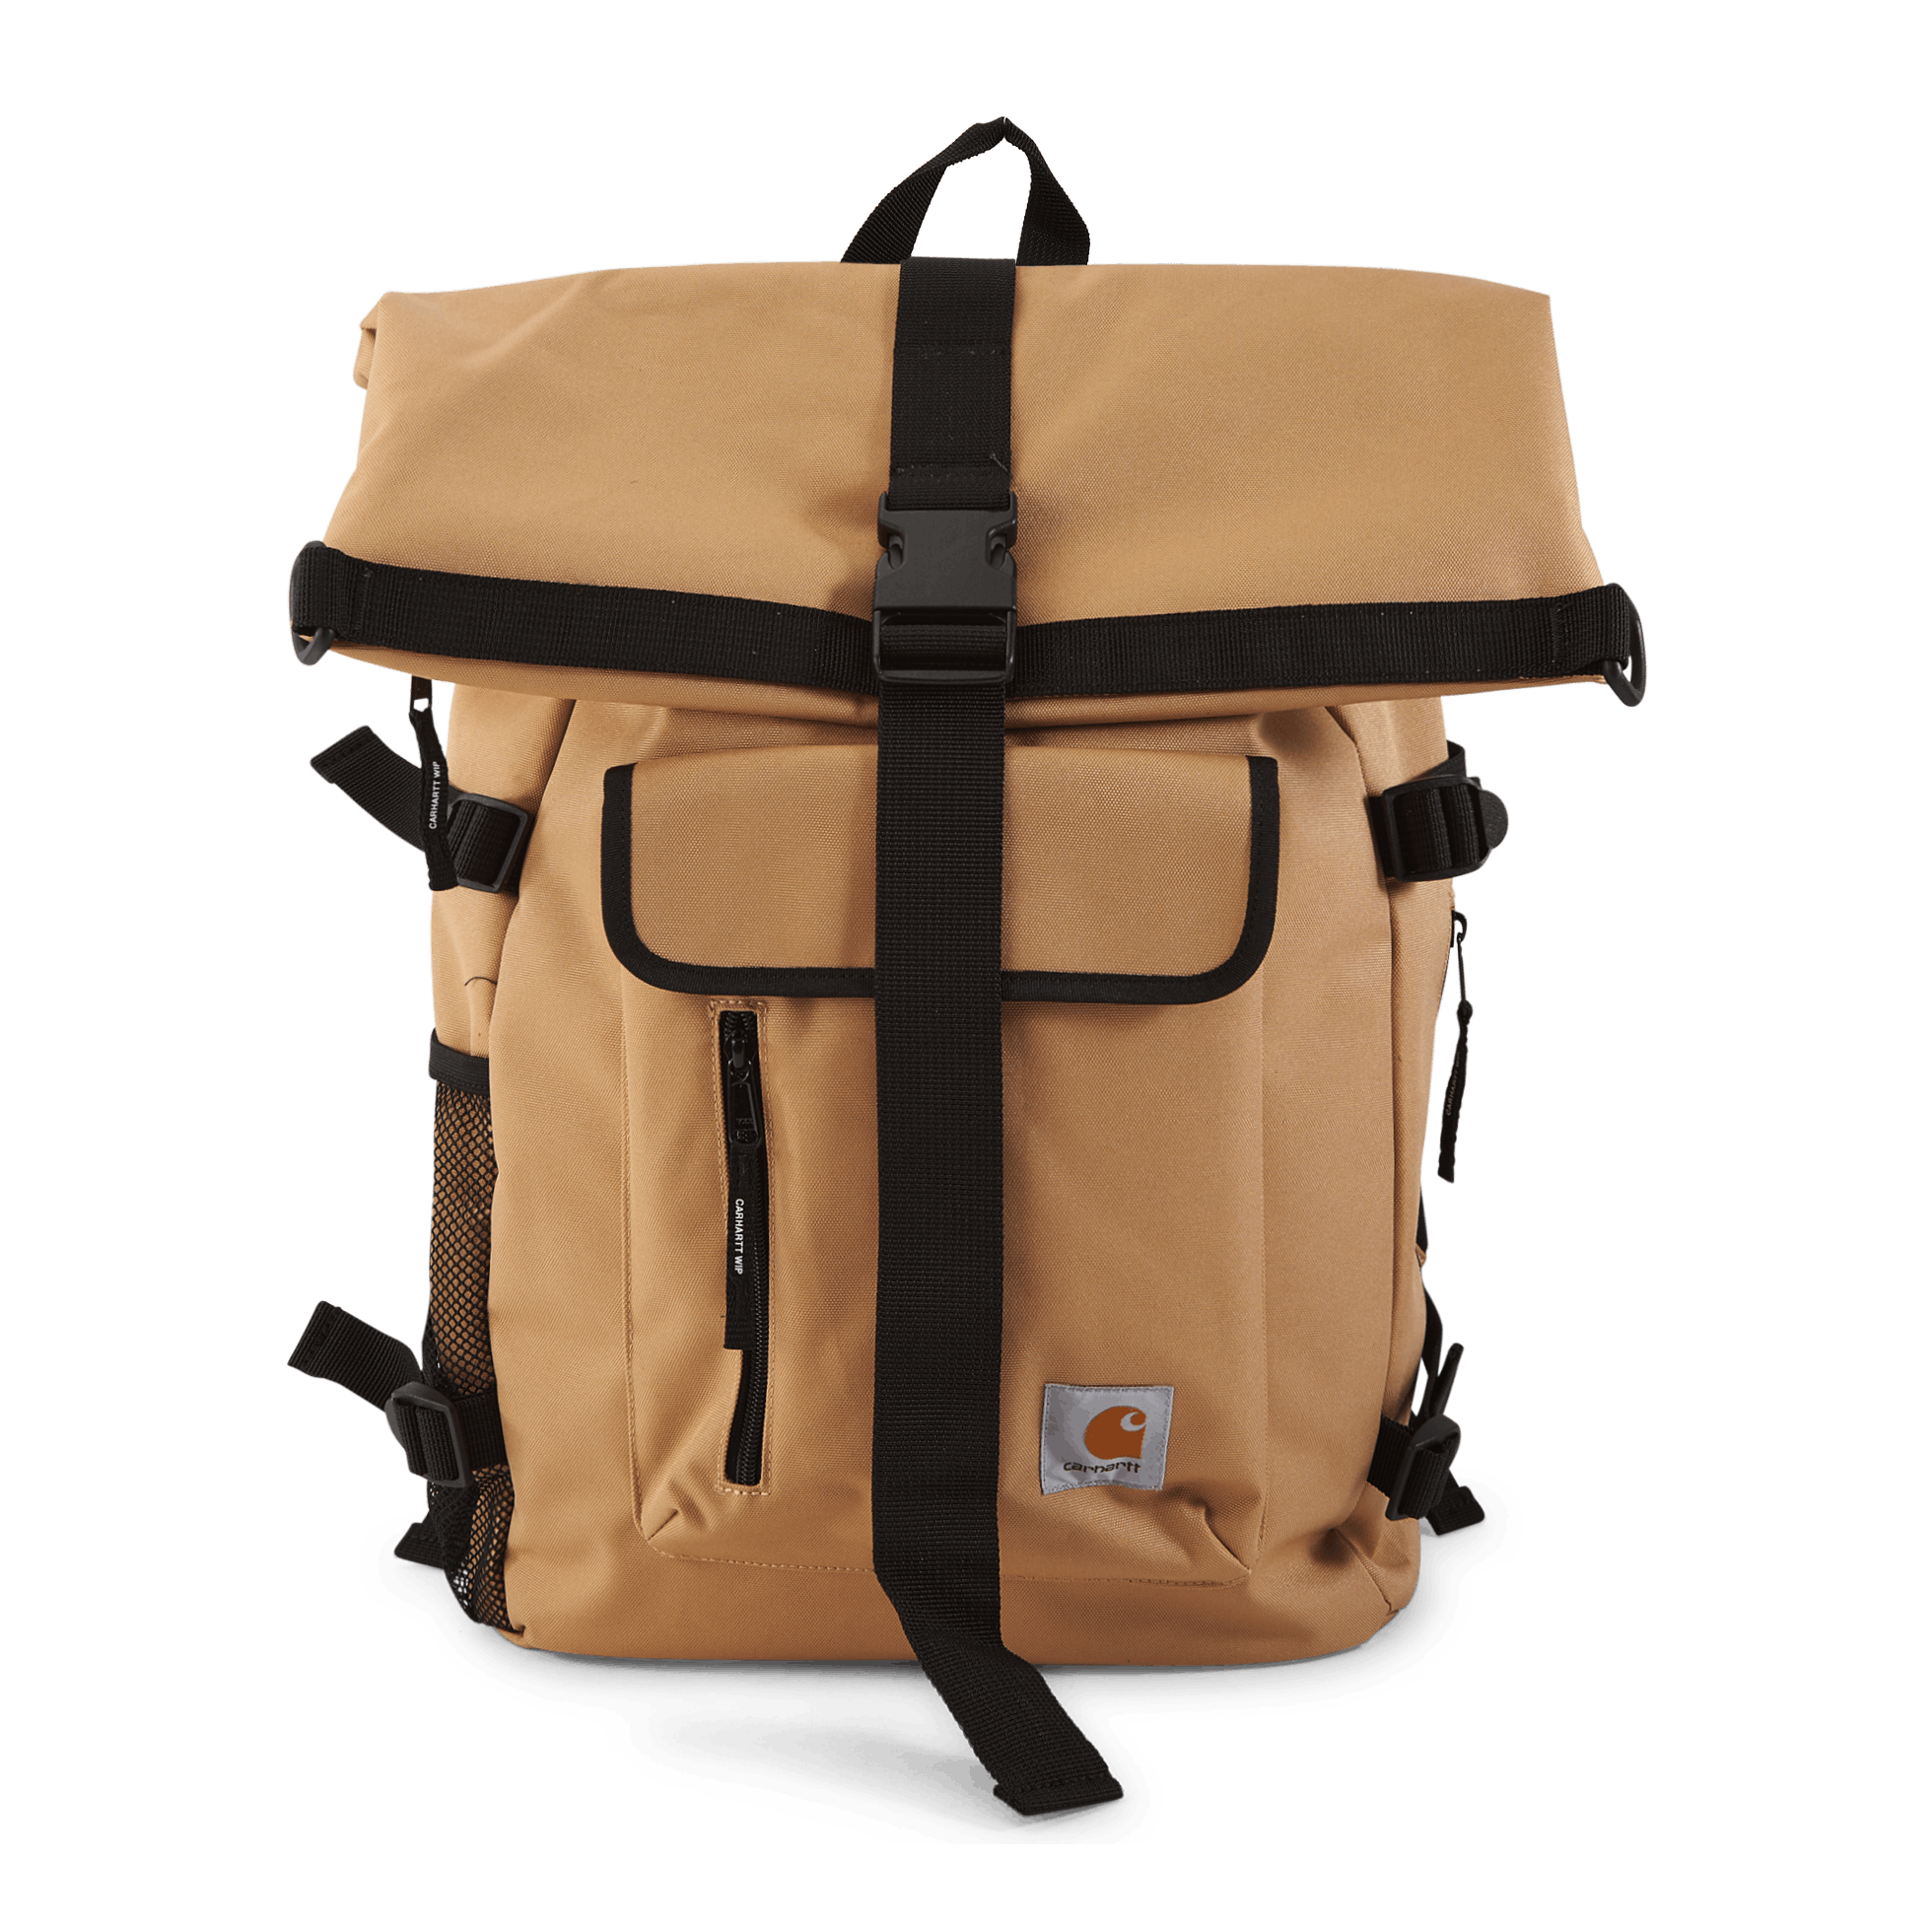 Carhartt WIP Essentials Bag Small - Hamilton Brown - One Size - Unisex